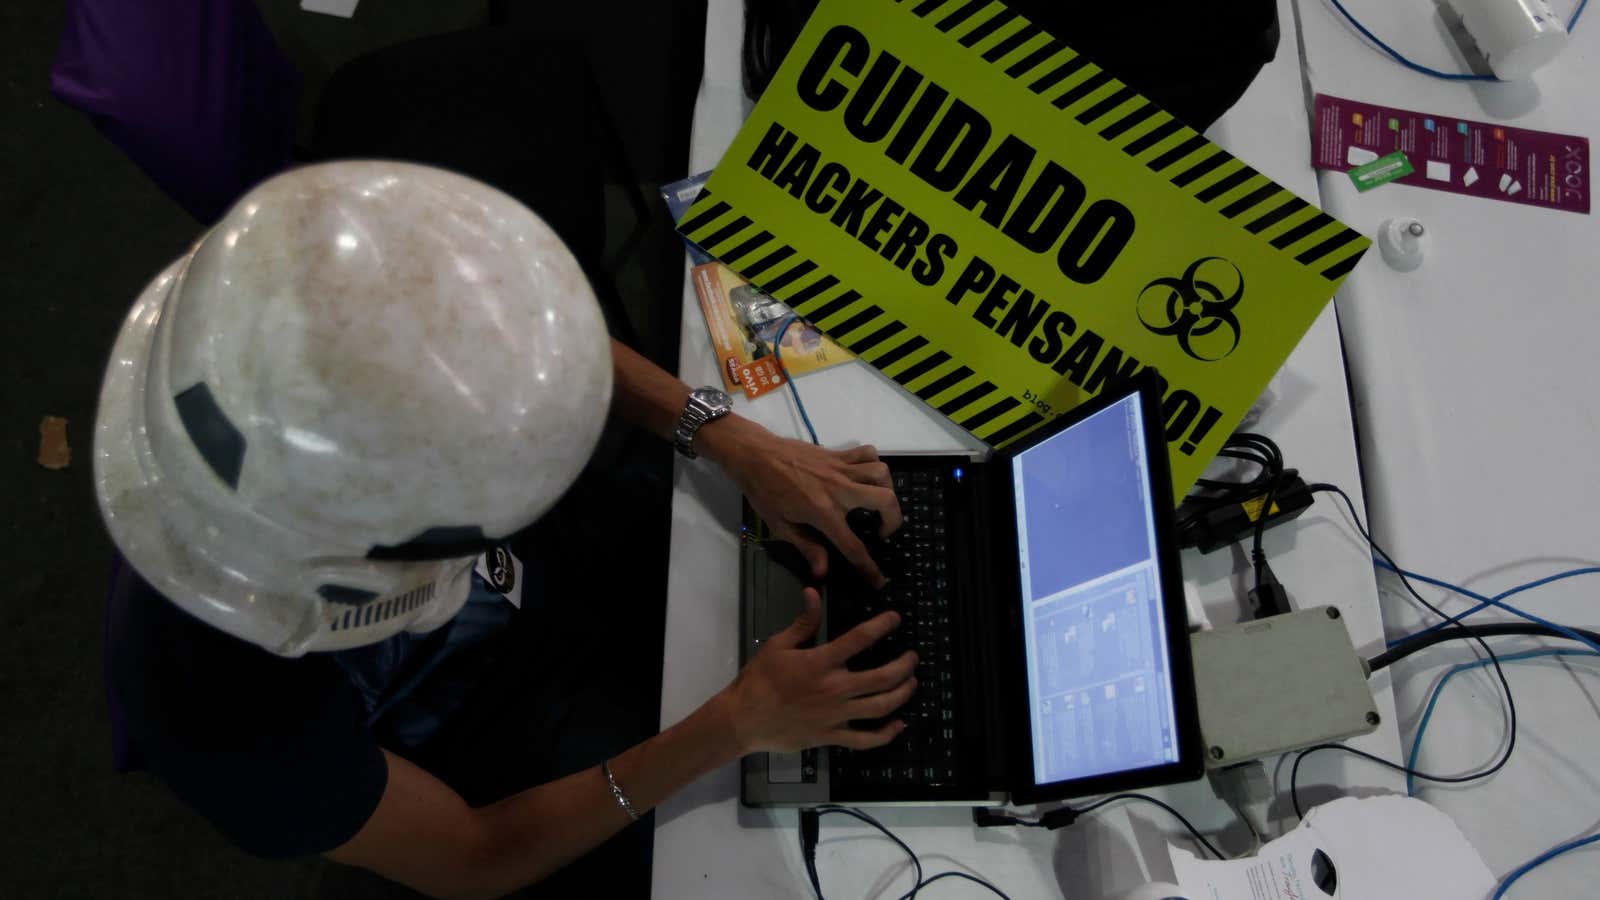 Brazil’s hacking away at internet freedoms.